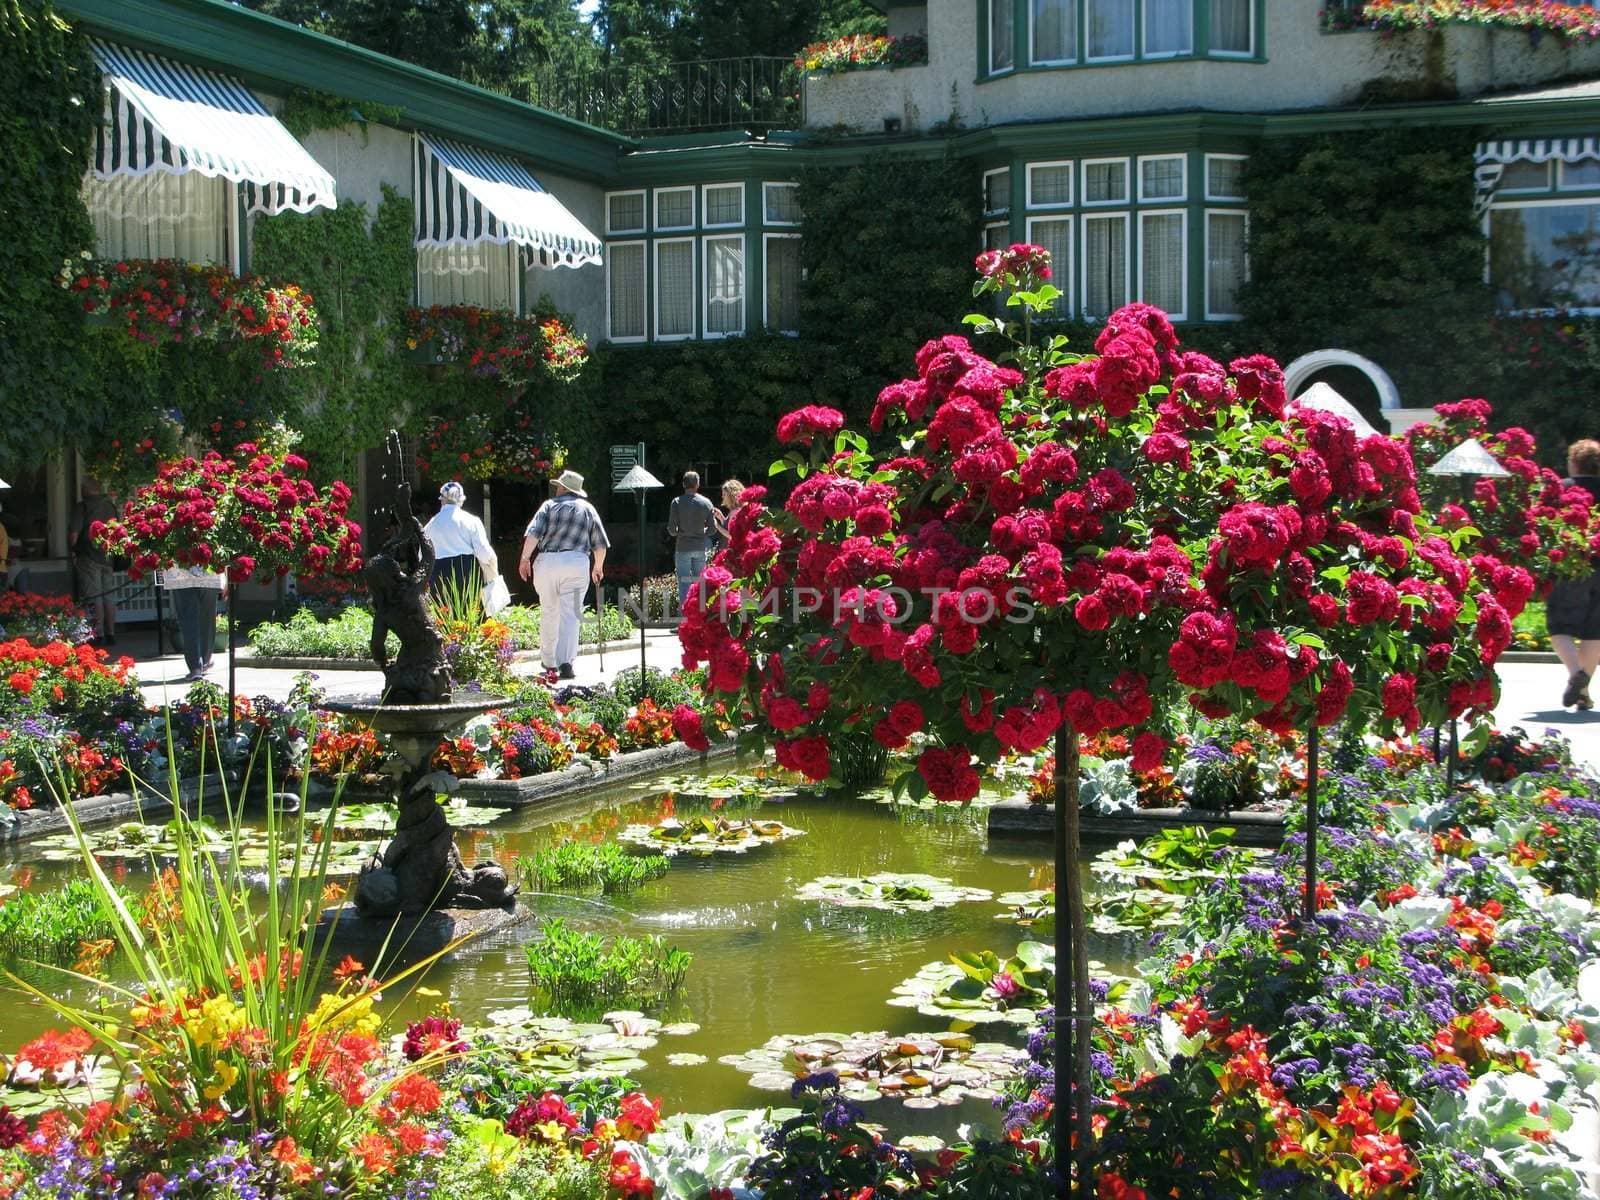 Butchart Garden in Victoria, British Columbia